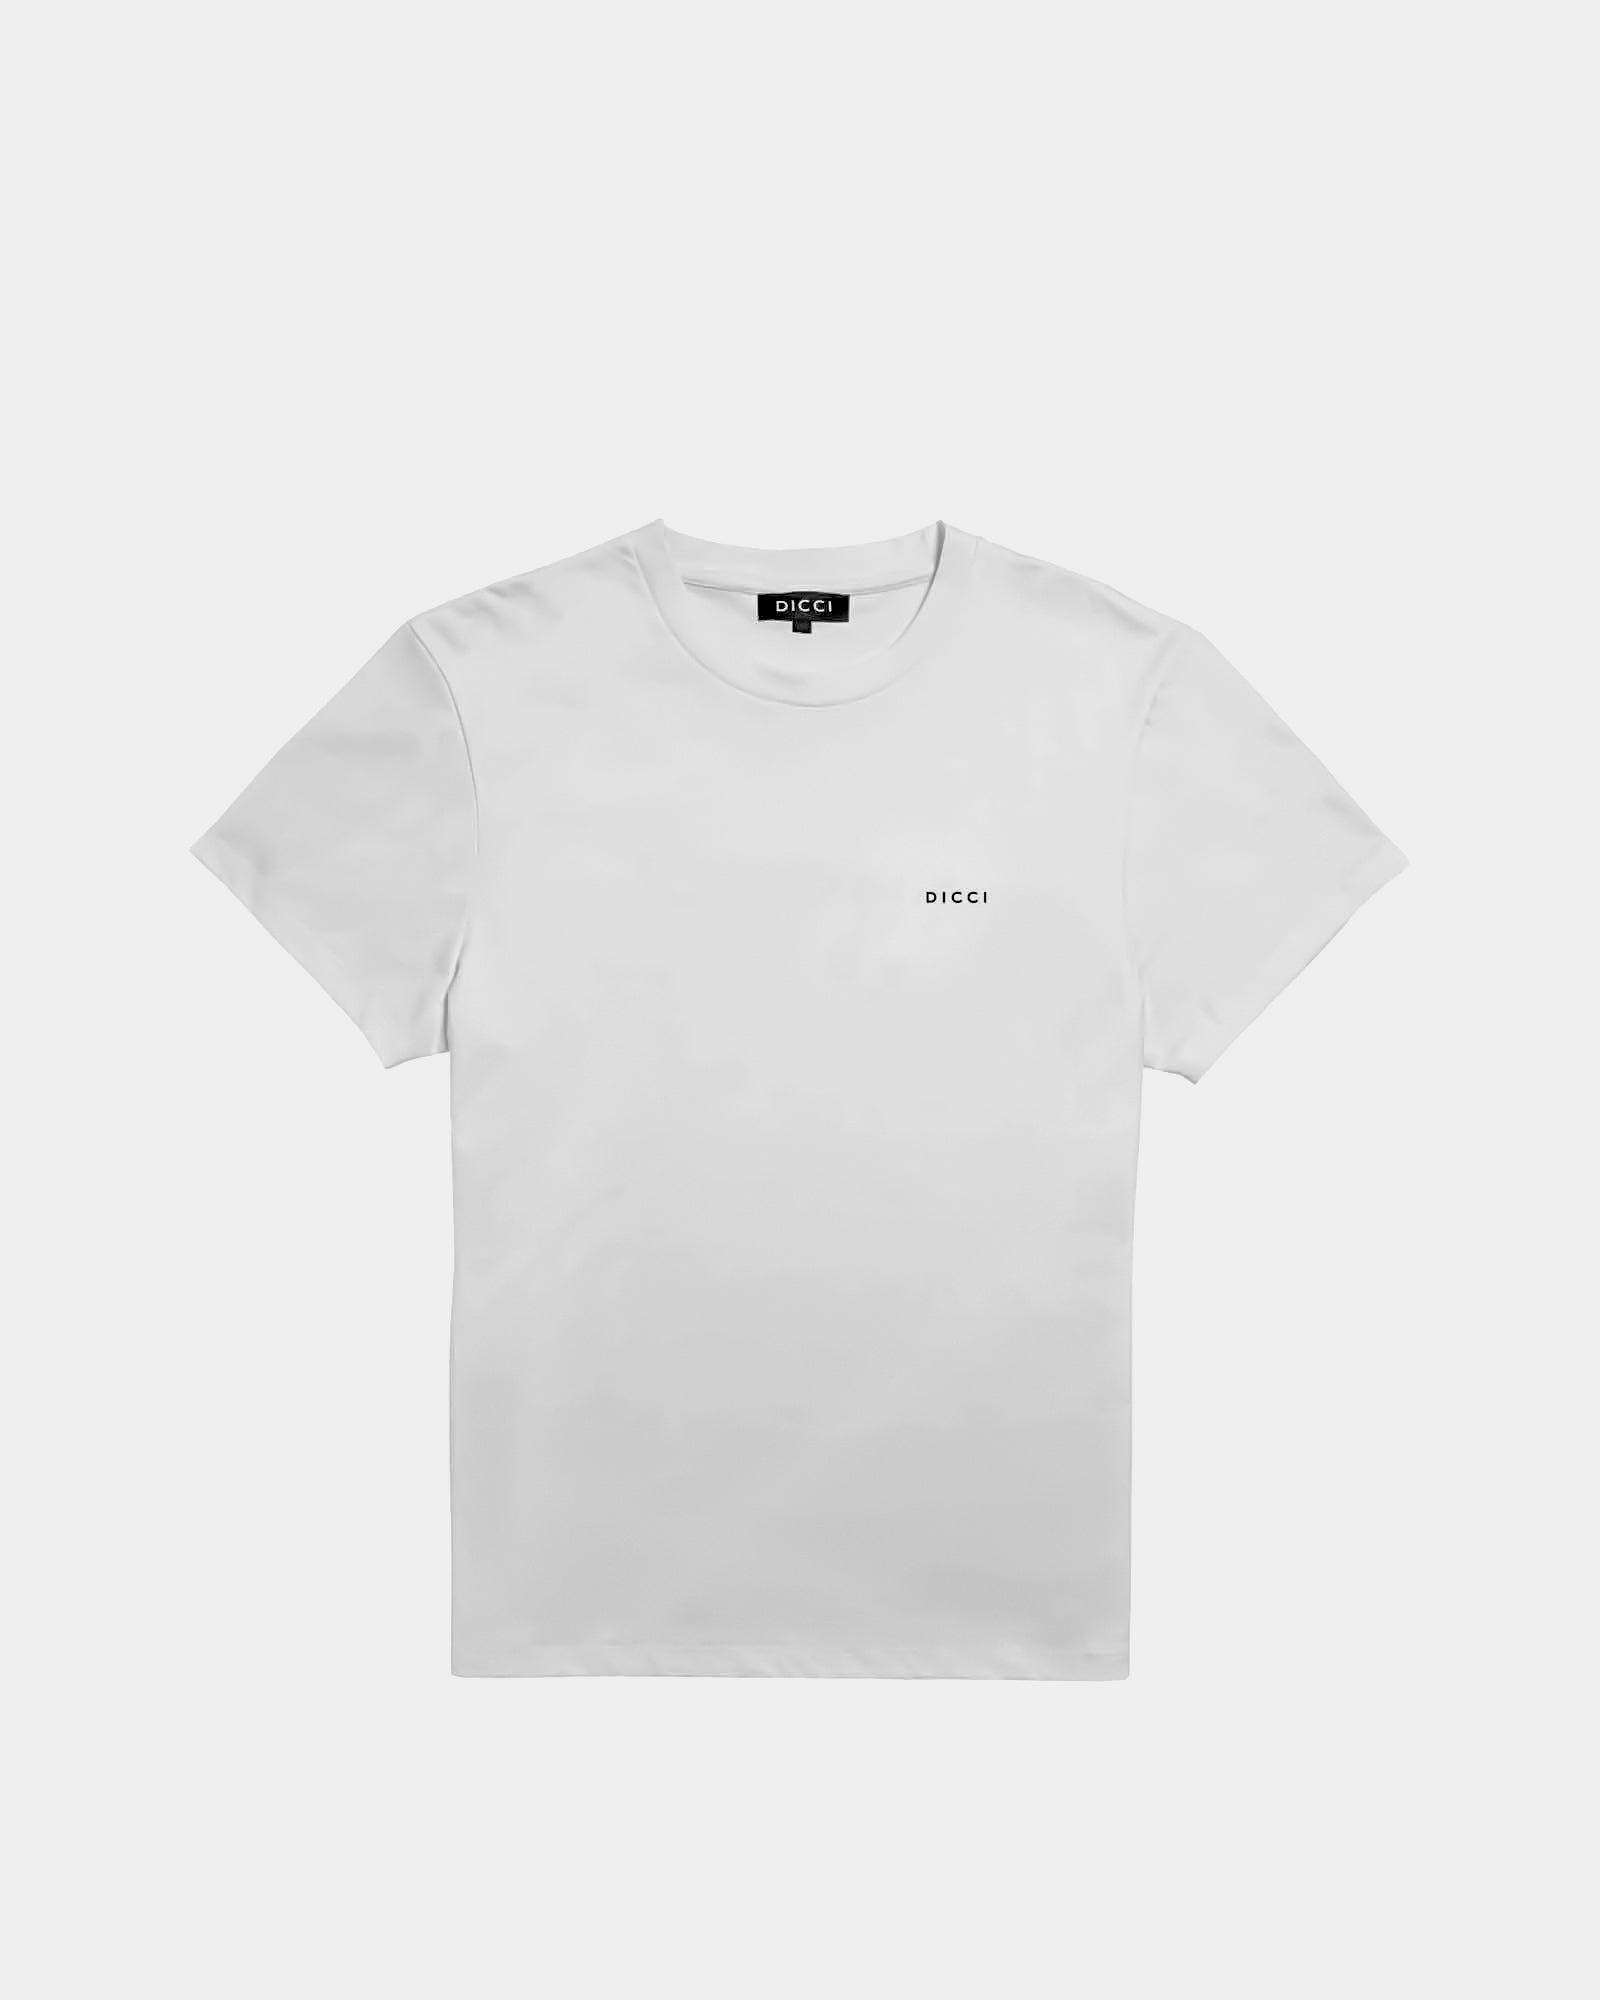 Basic white Dicci T-shirt - Cotton T-shirts - Dicci